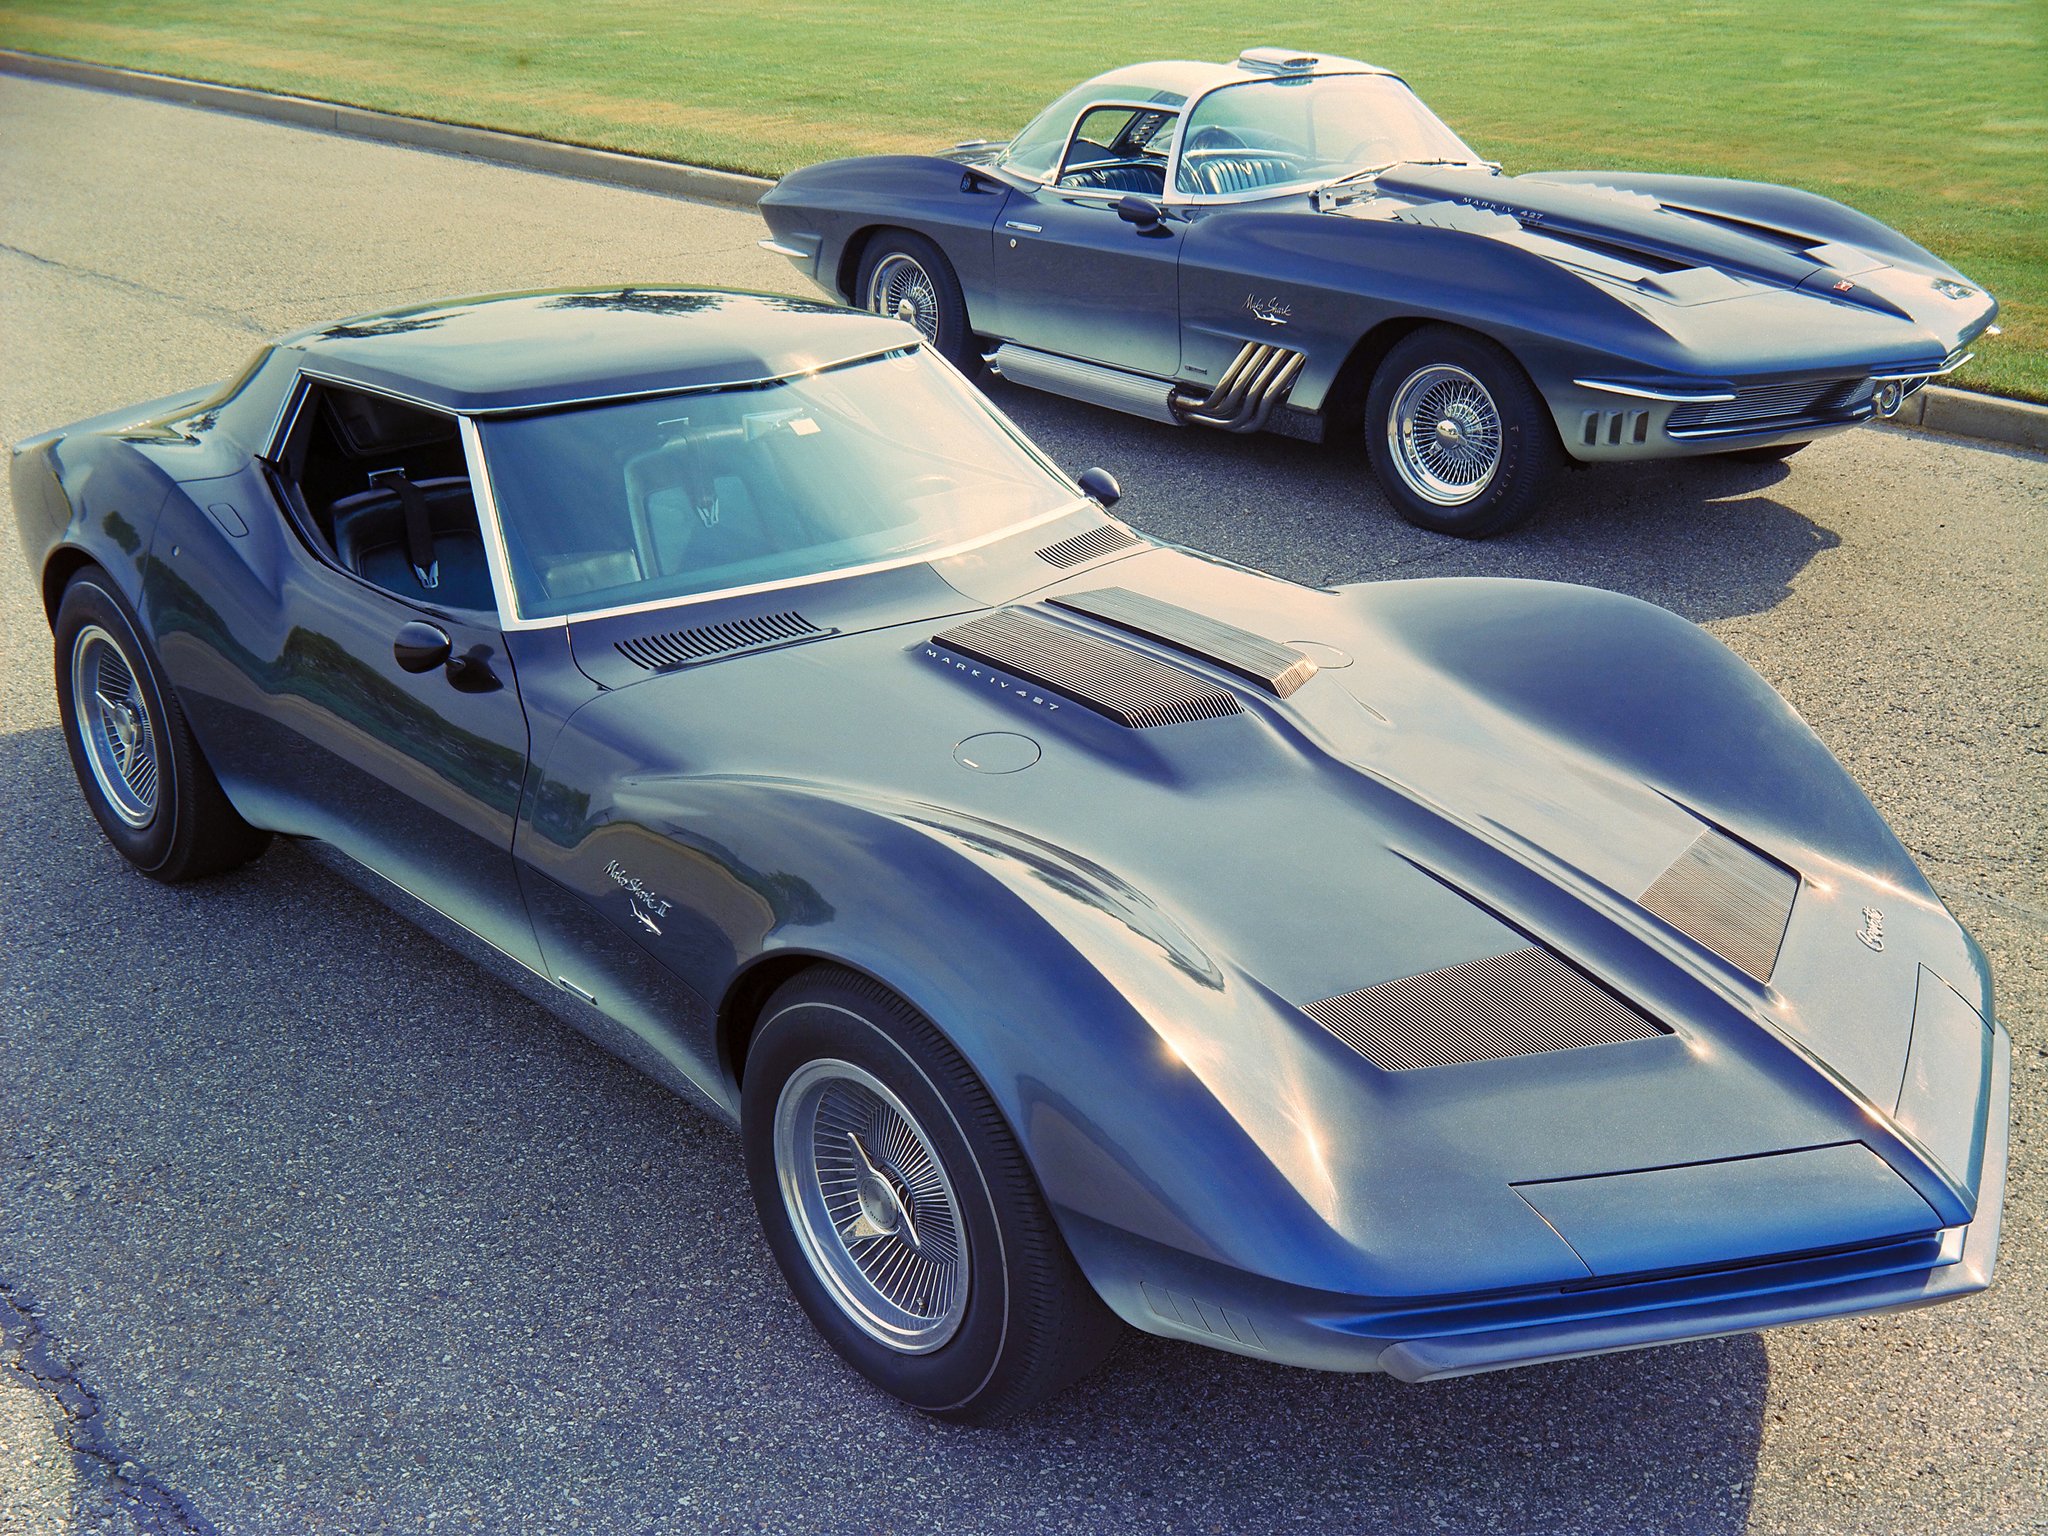 mako, Shark, I i, 1965, And, Xp 755, 1961, Chevrolet, Corvette, Muscle, Tuning, Supercar Wallpaper